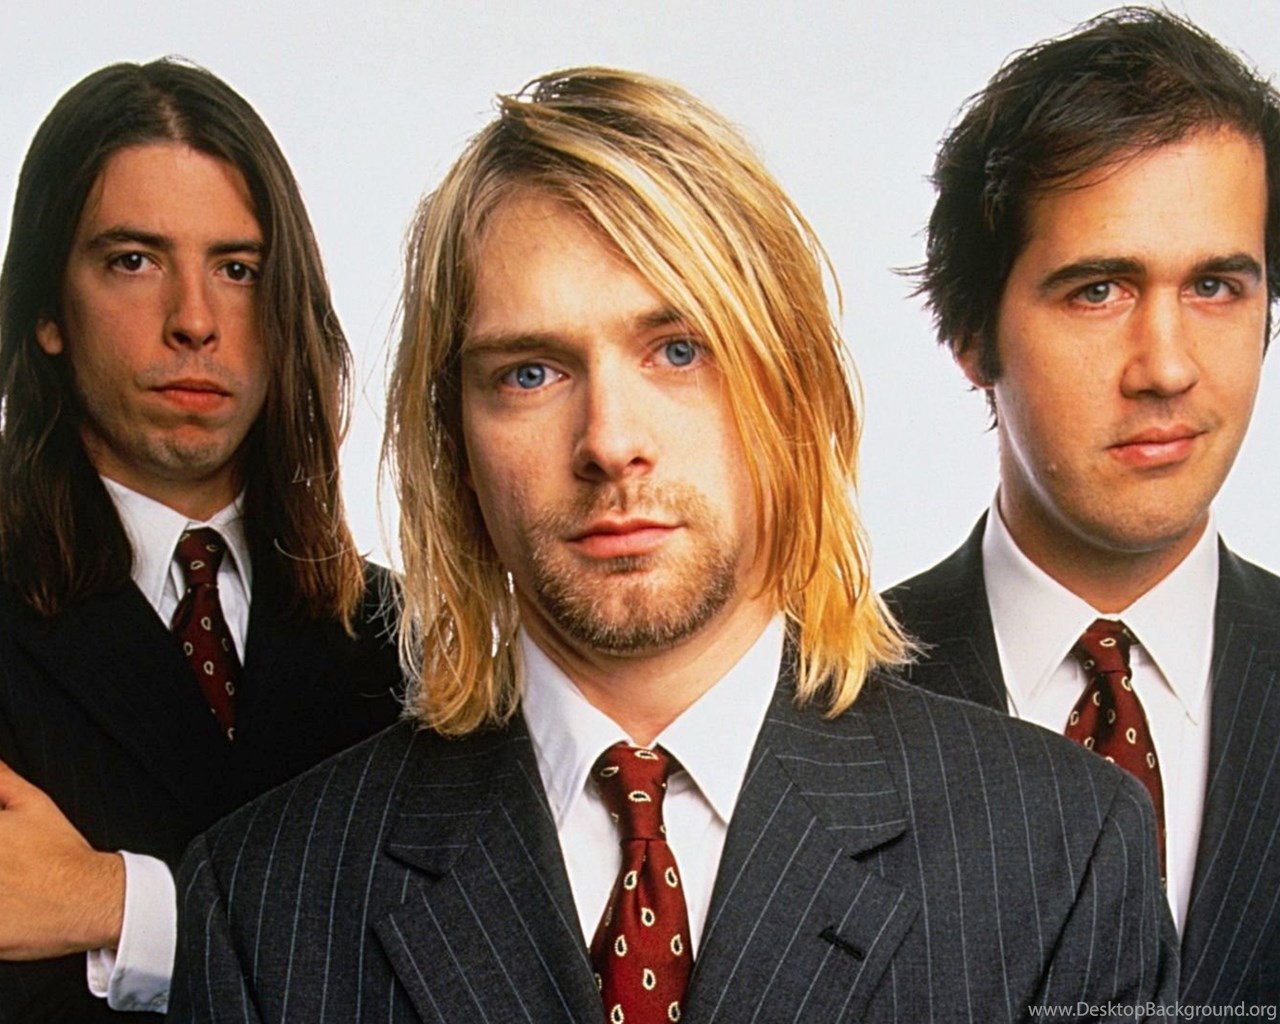 Nirvana музыка. Рок группа Нирвана. Нирвана фото группы. Крист Новоселич и Курт Кобейн. Группа Нирвана Курт Кобейн.